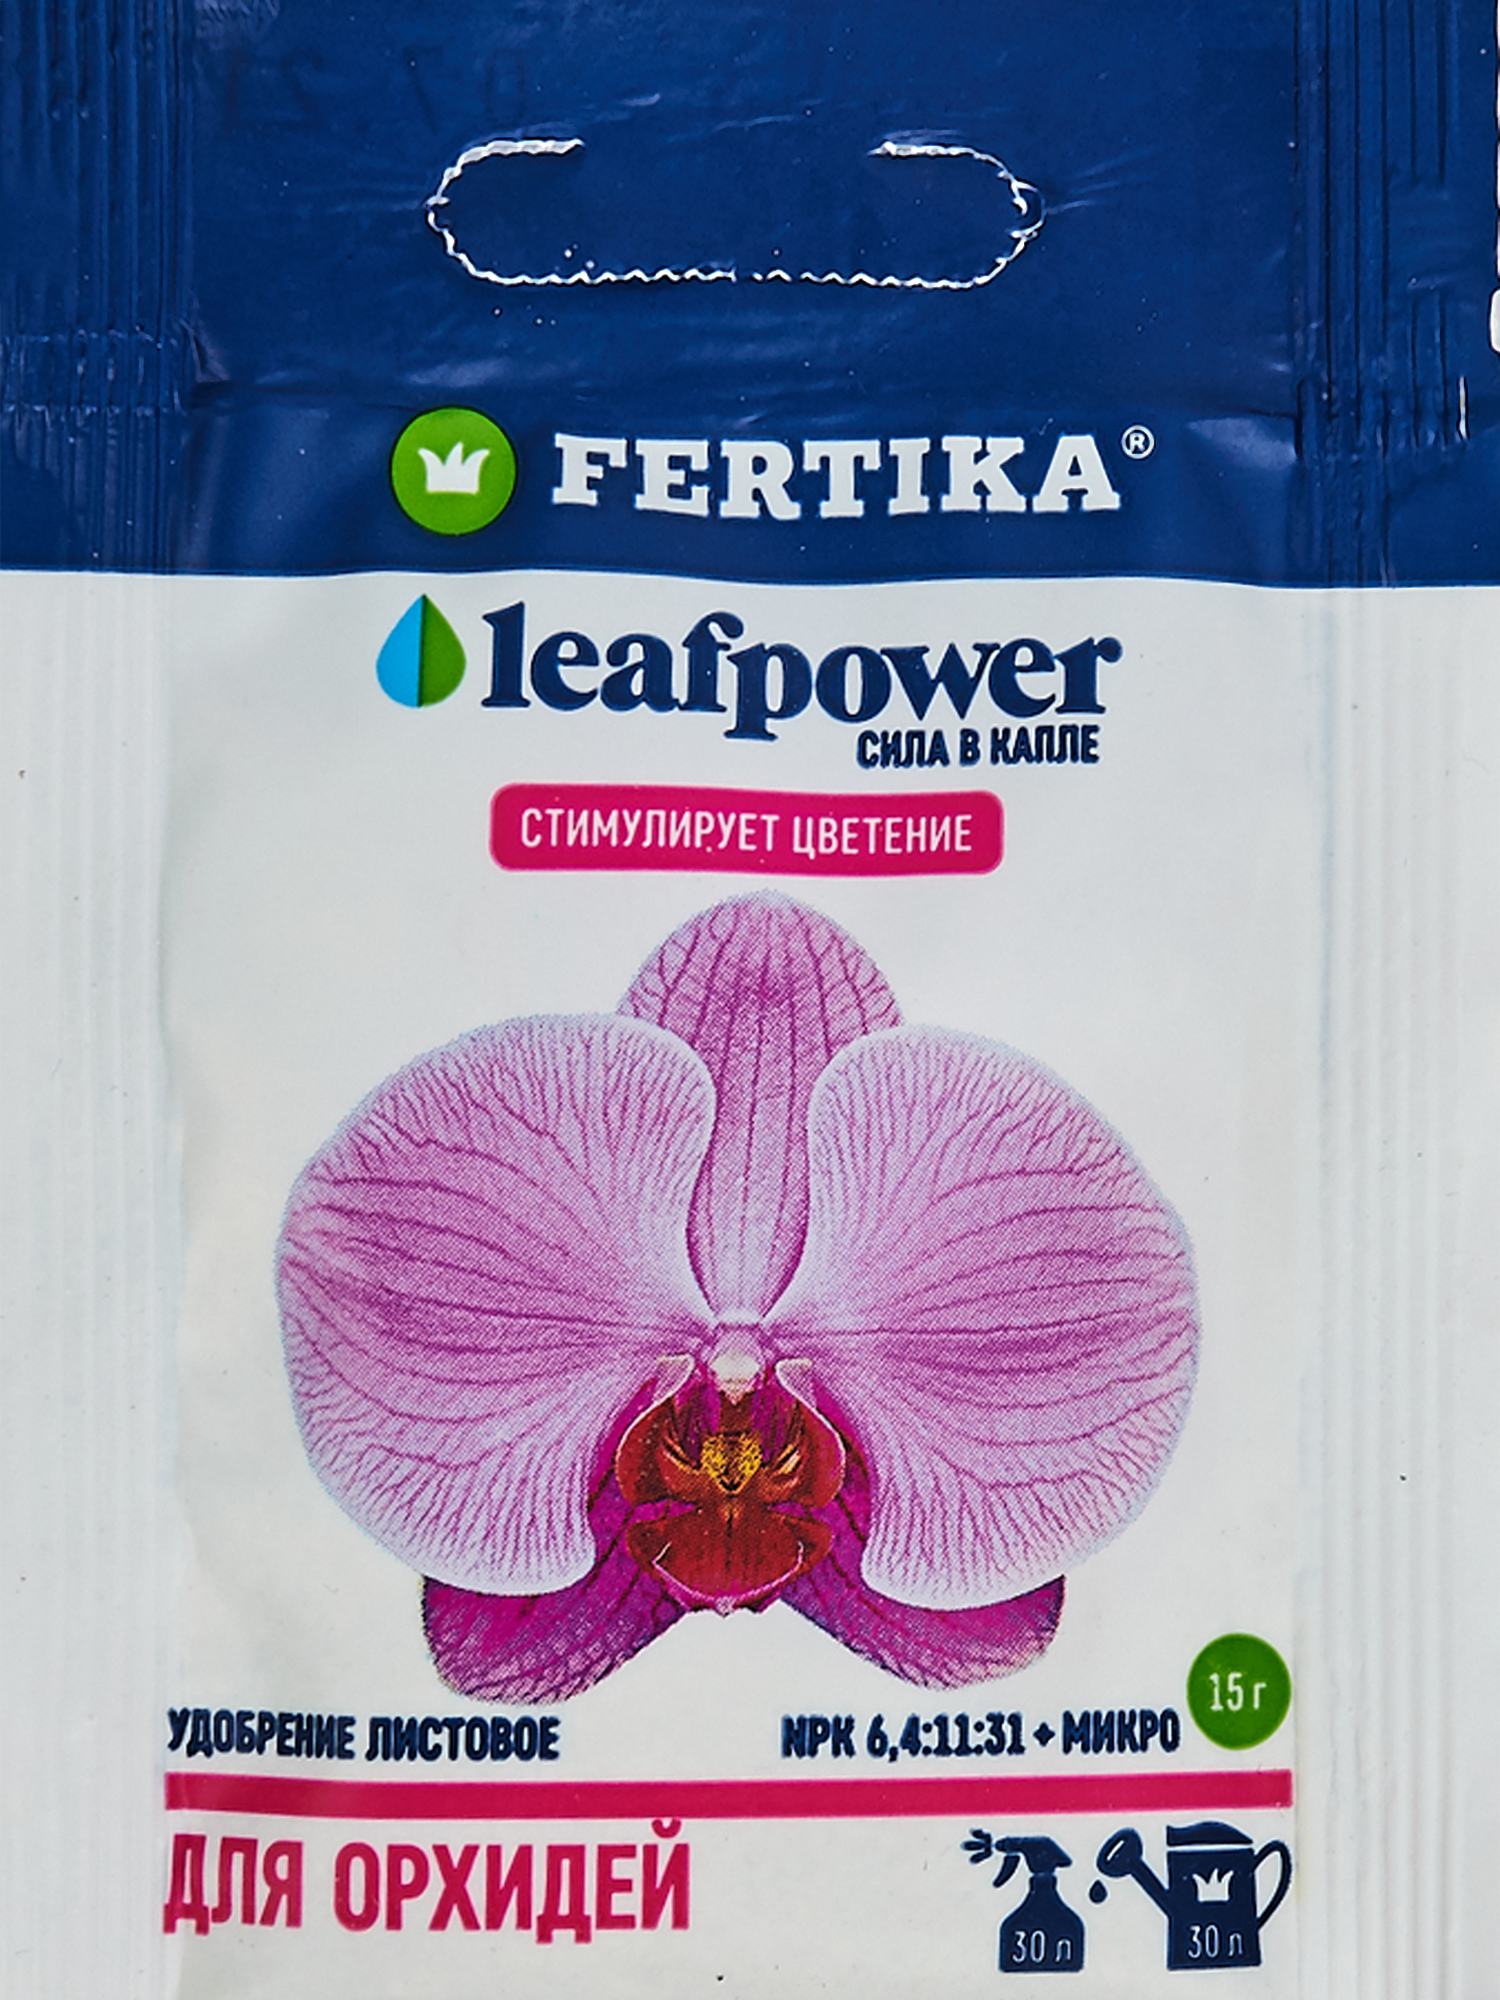 85222424 Удобрение Leafpower для орхидей 15 г STLM-0059975 FERTIKA